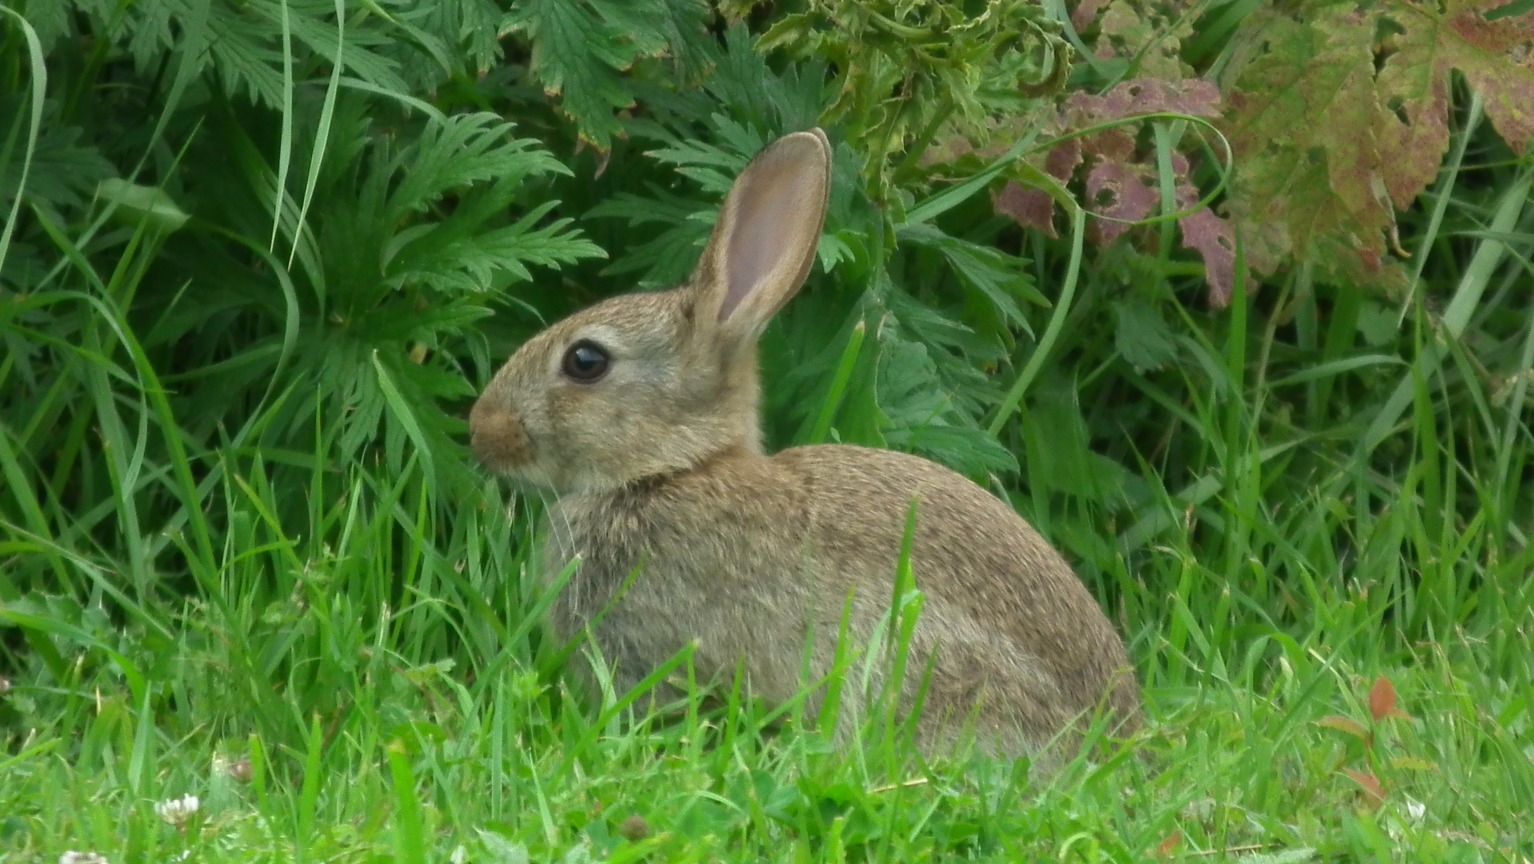 Young Rabbit, Rabbit | Young | Animal | Four Legged | Fur | Furry | Ears | Eye | Eyes | Wild | Wildlife